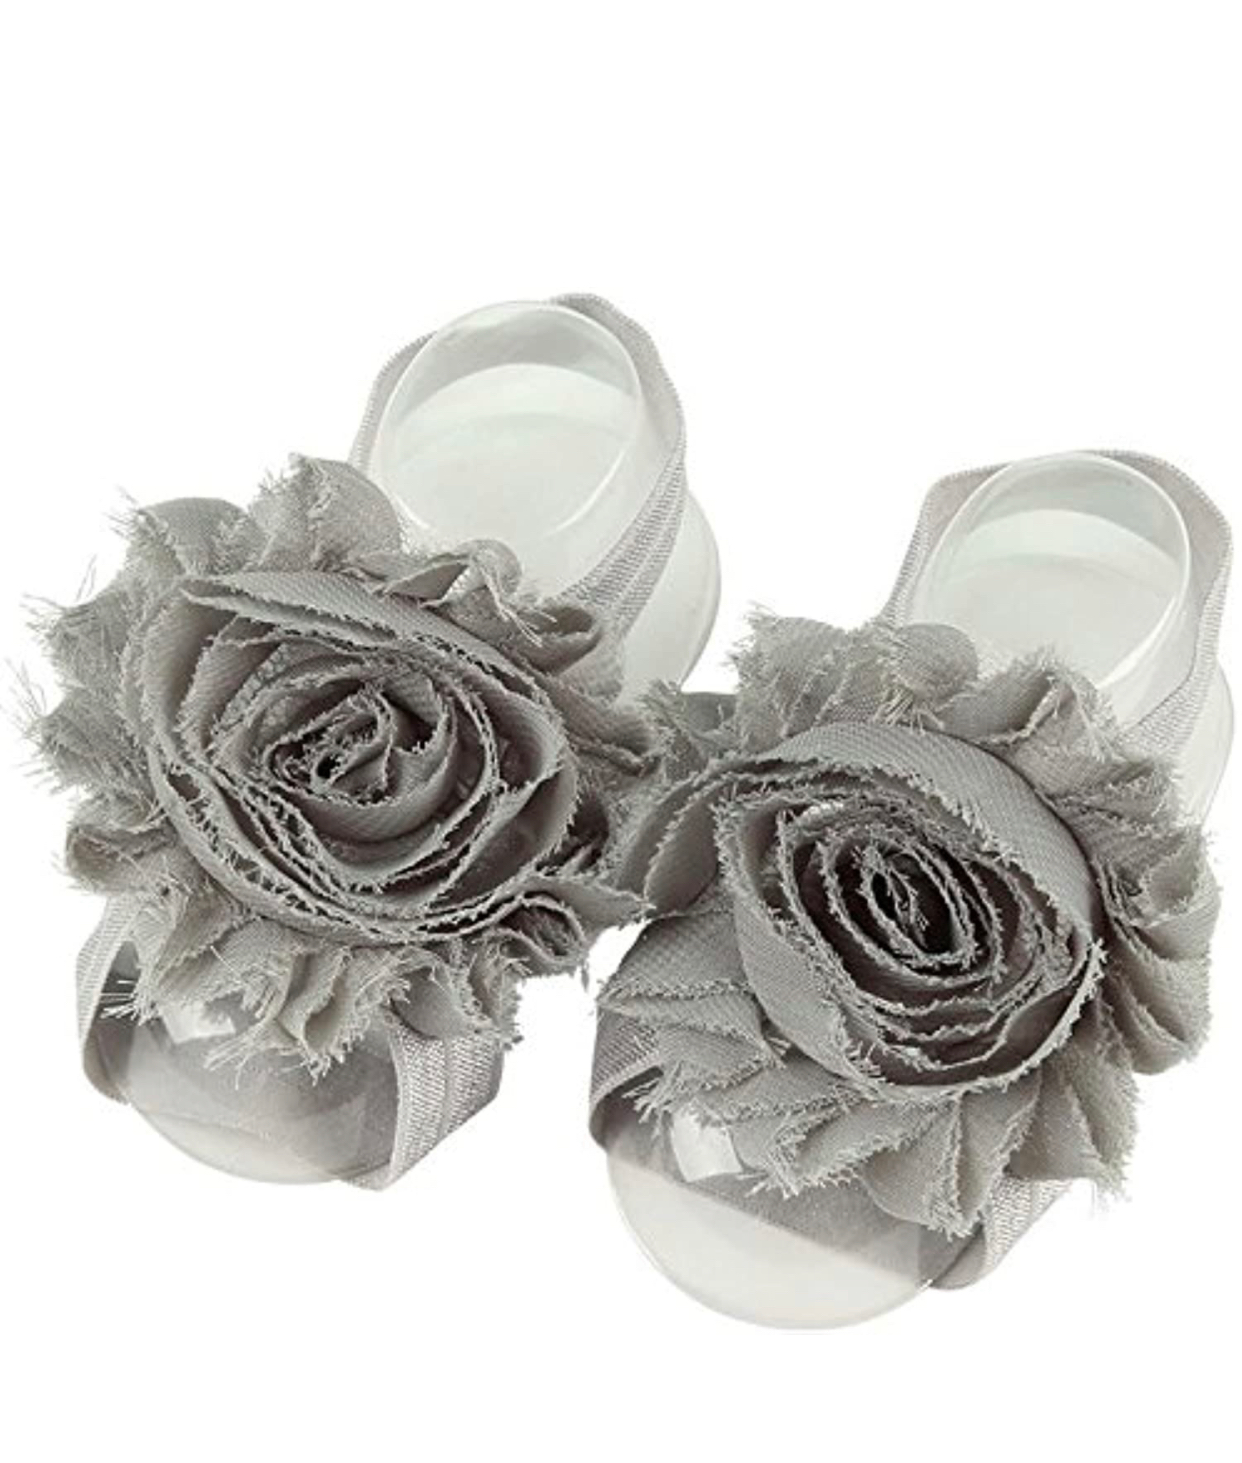 Infant/Toddler Barefoot Flower Sandals One Size